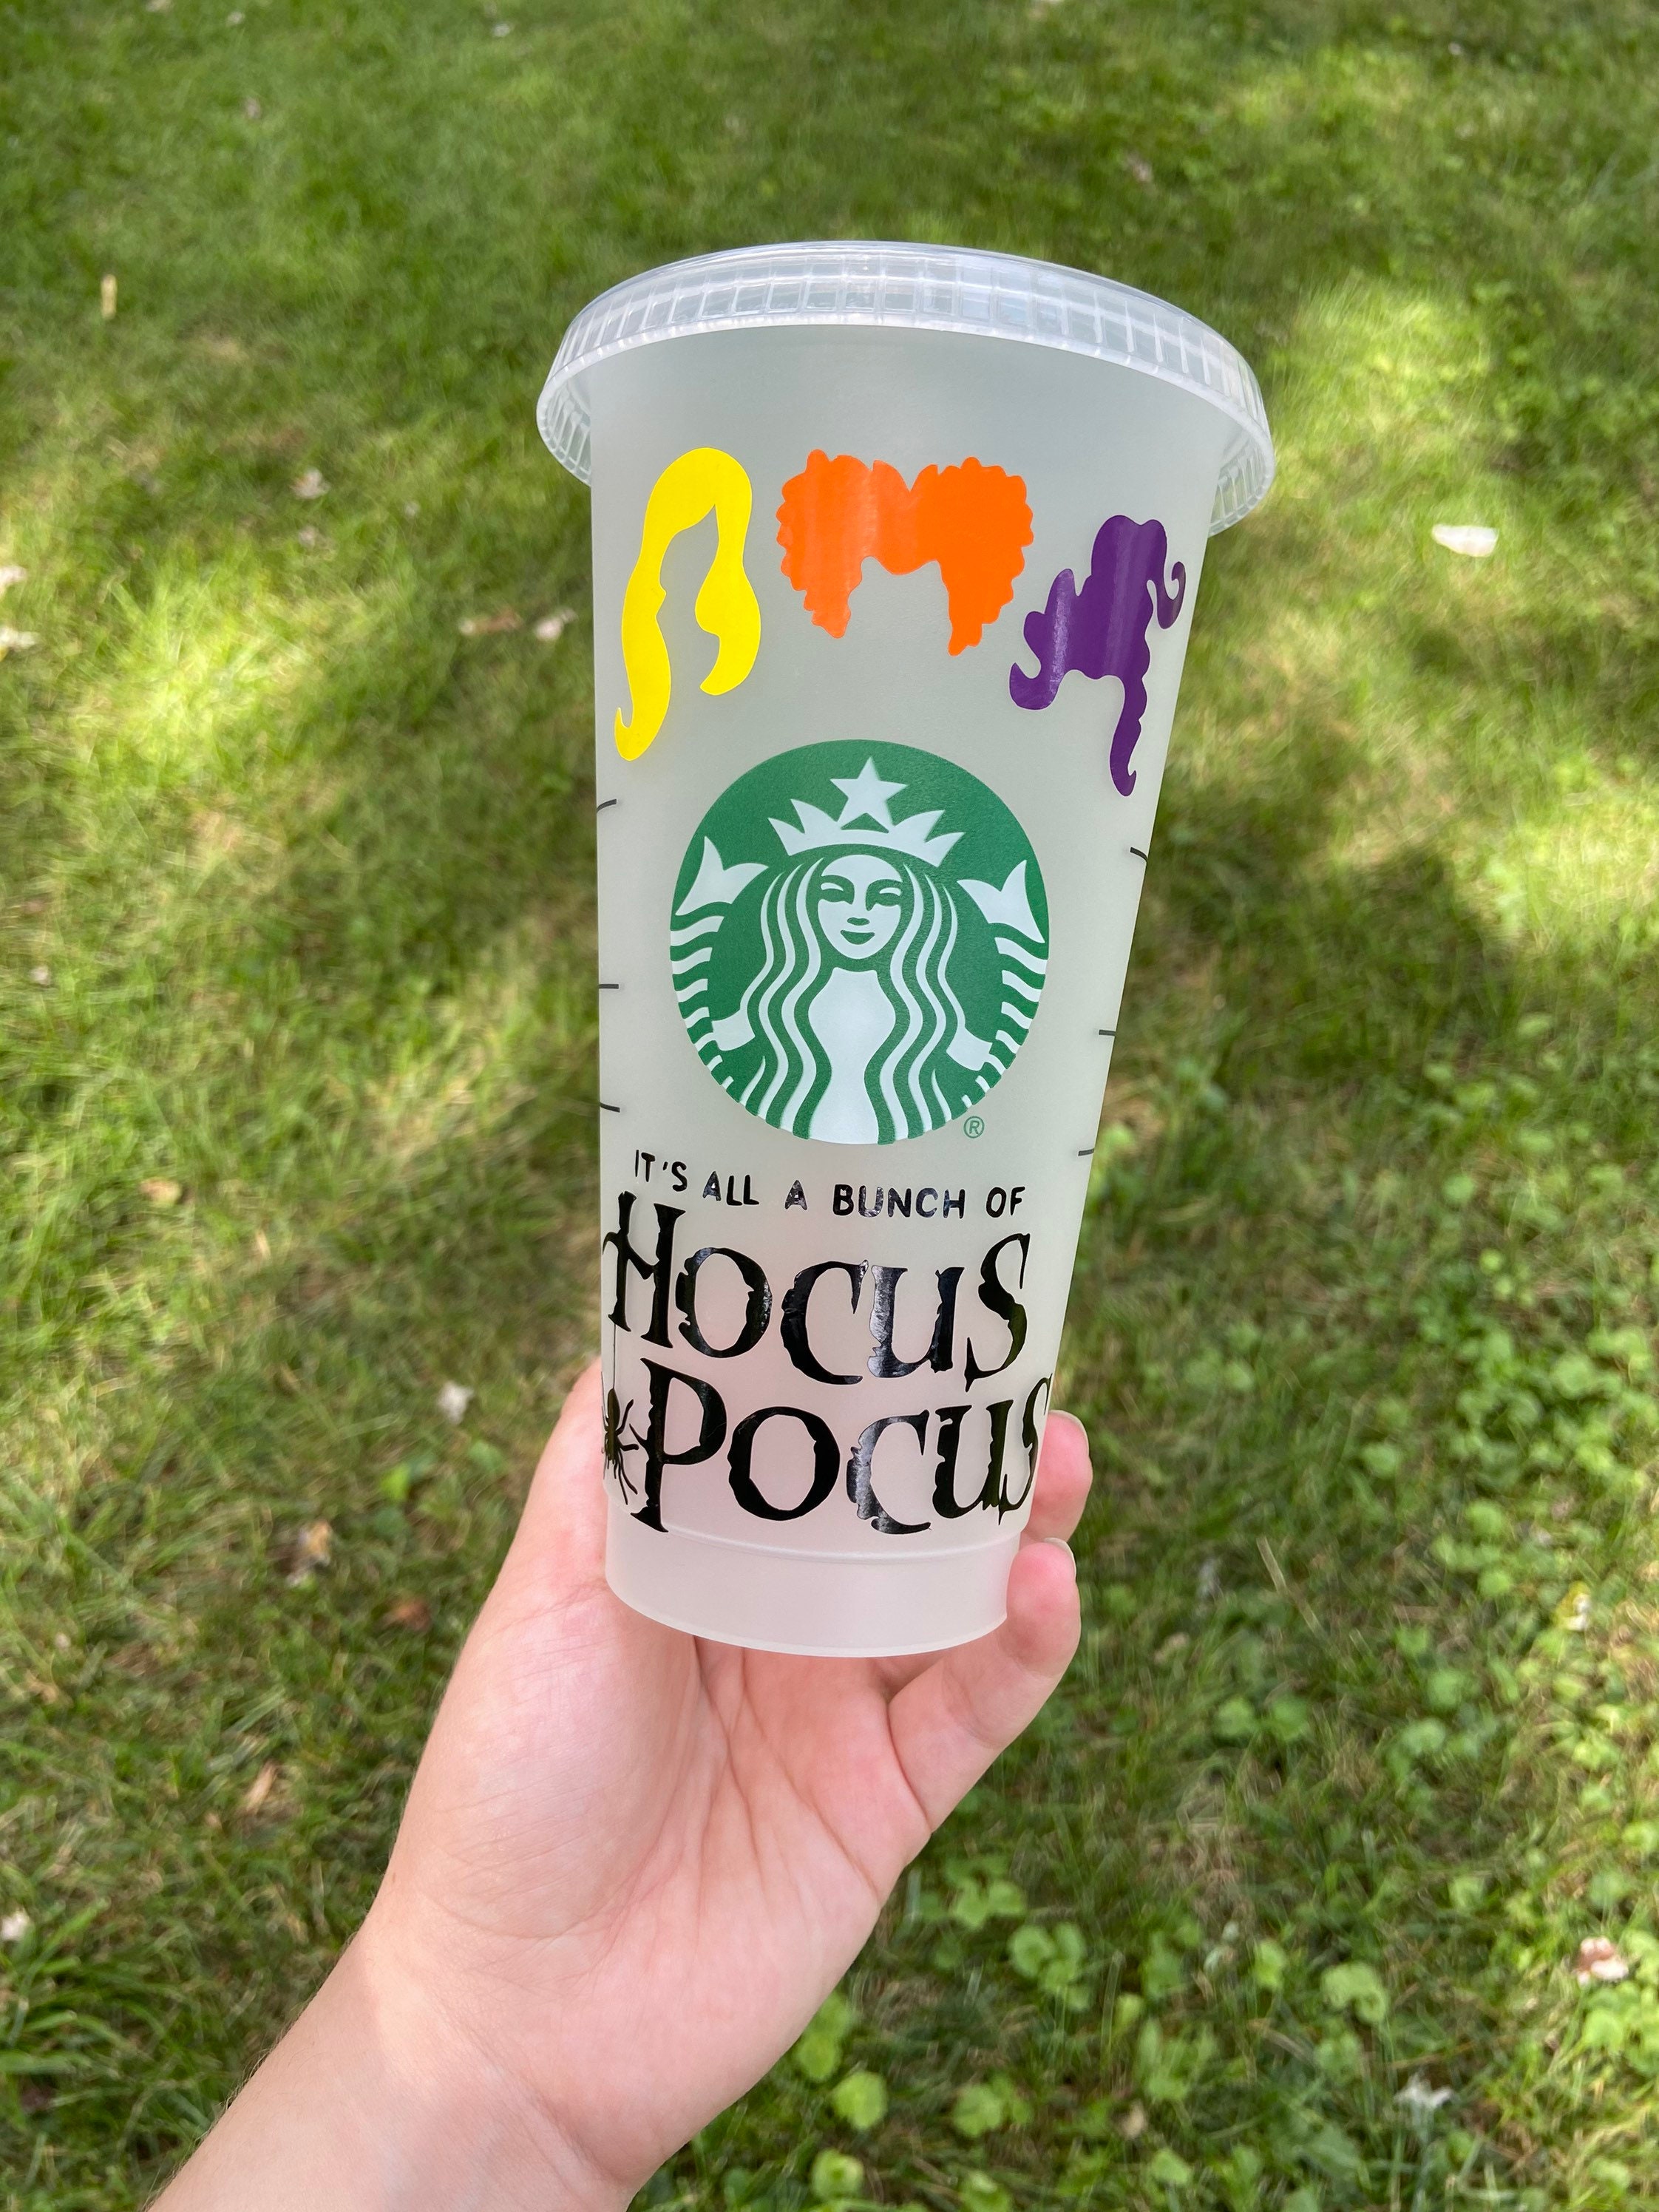 It’s a bunch of hocus pocus Starbucks cup. 